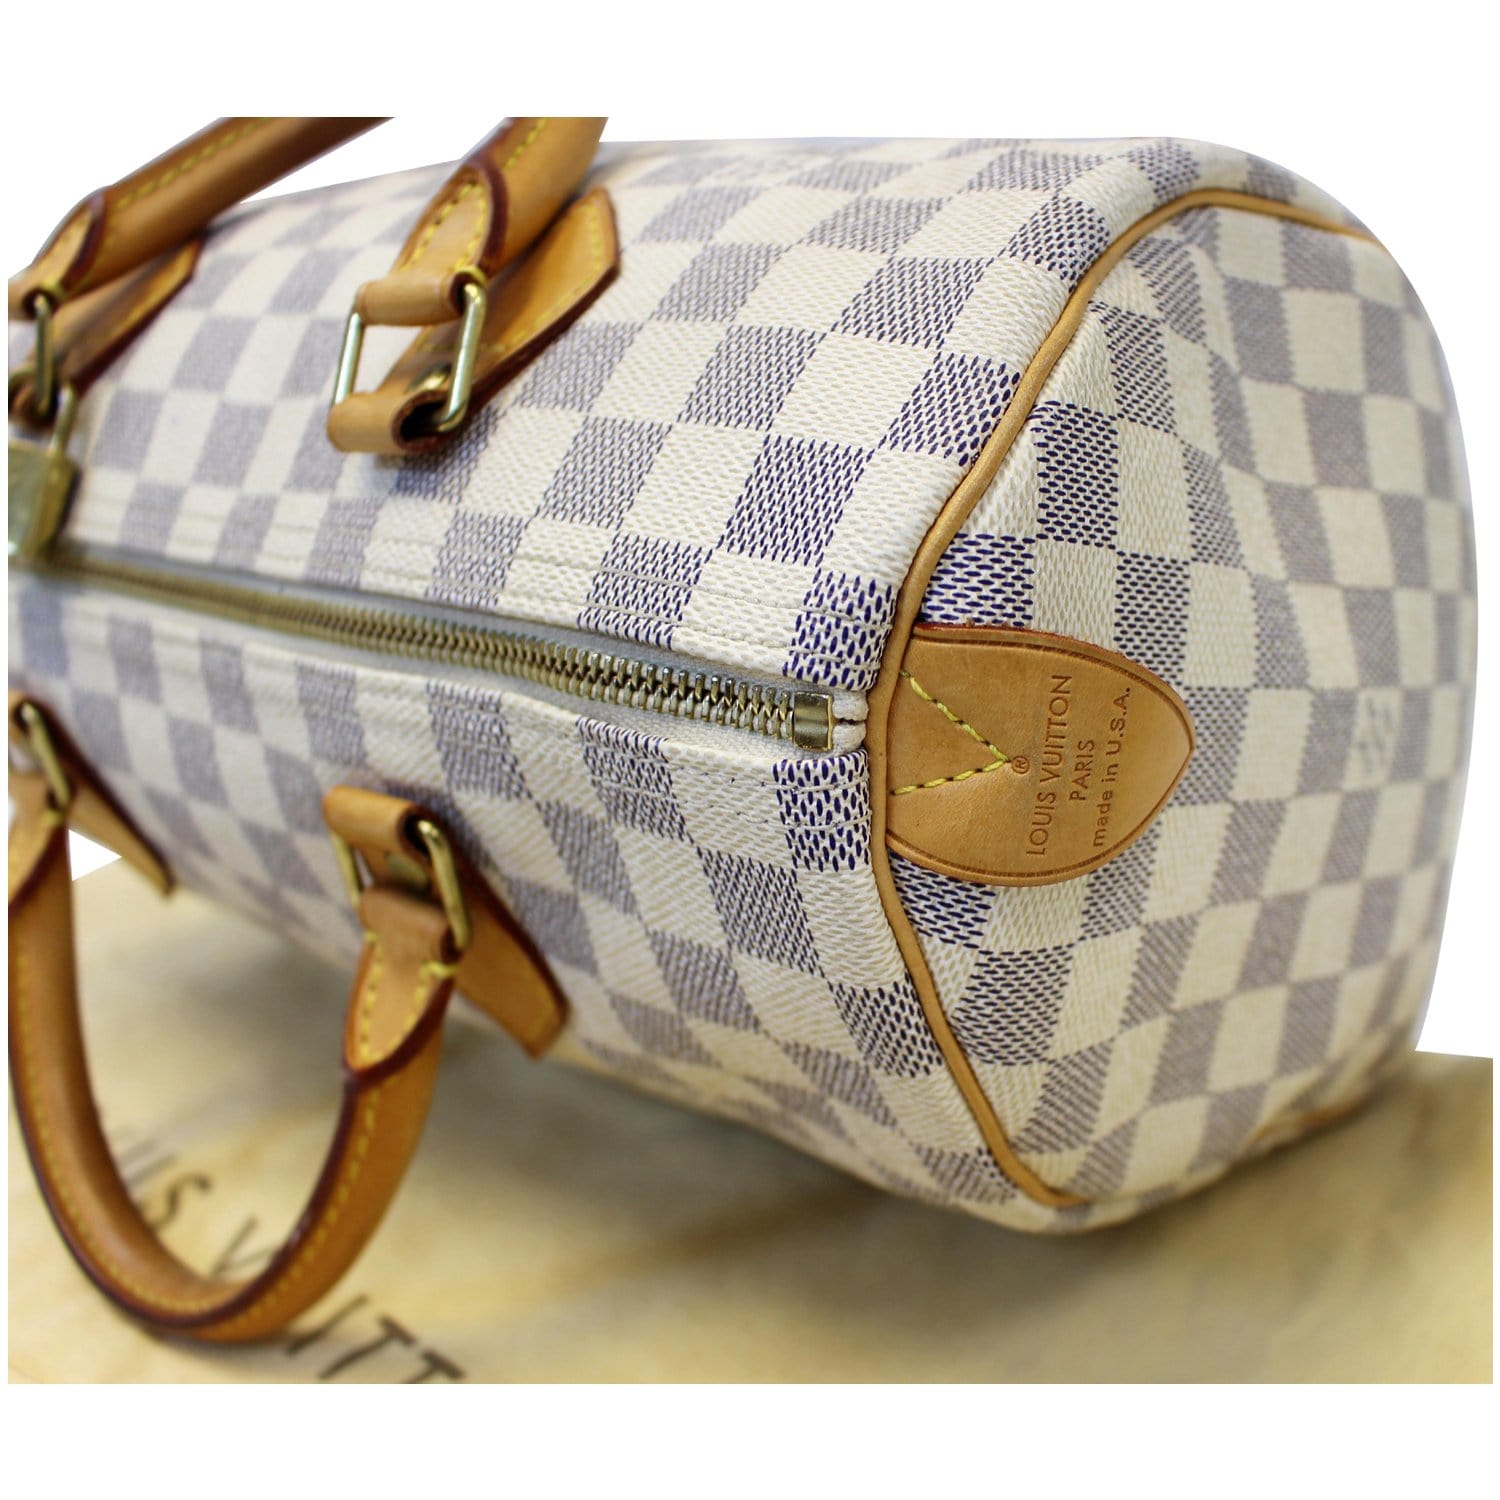 Pre-Owned Louis Vuitton Speedy 30 Damier Azur White Handbag